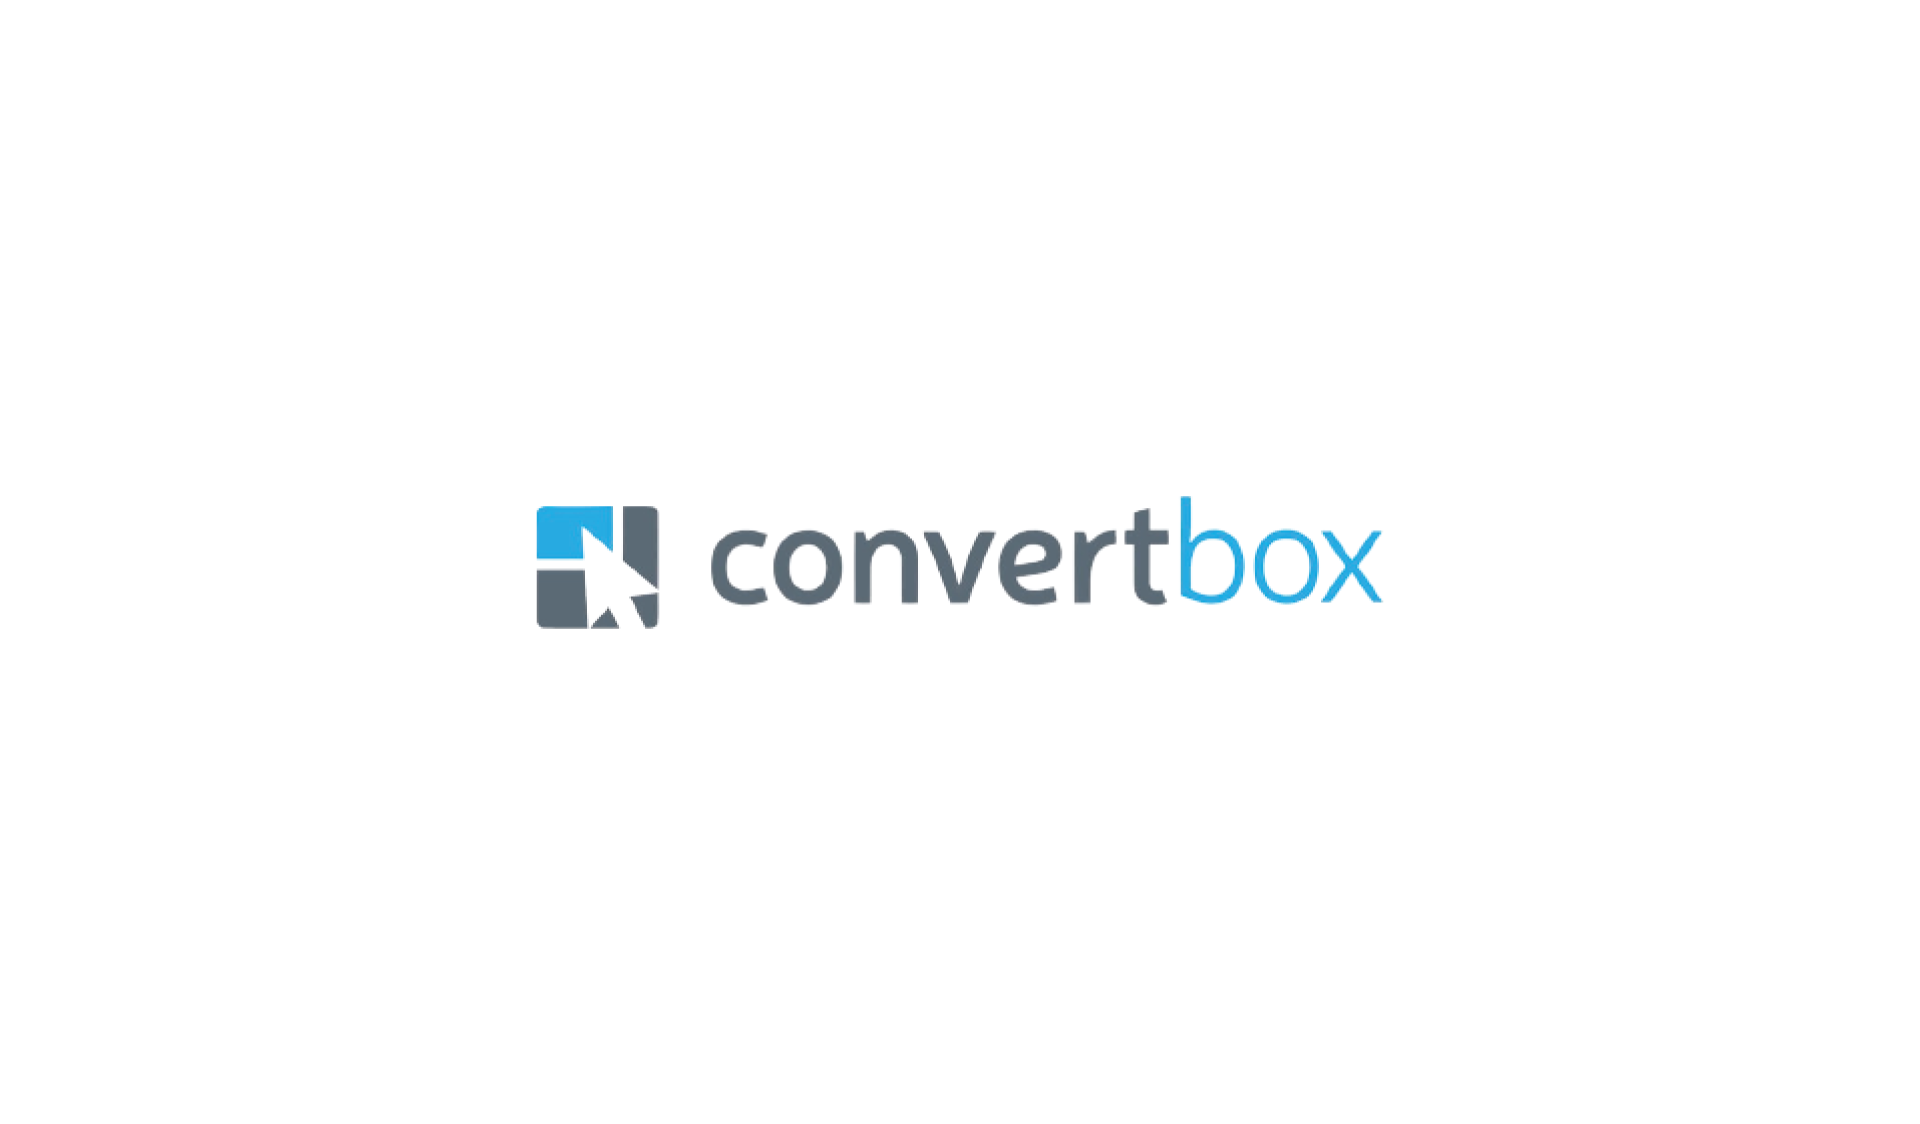 convertbox logo